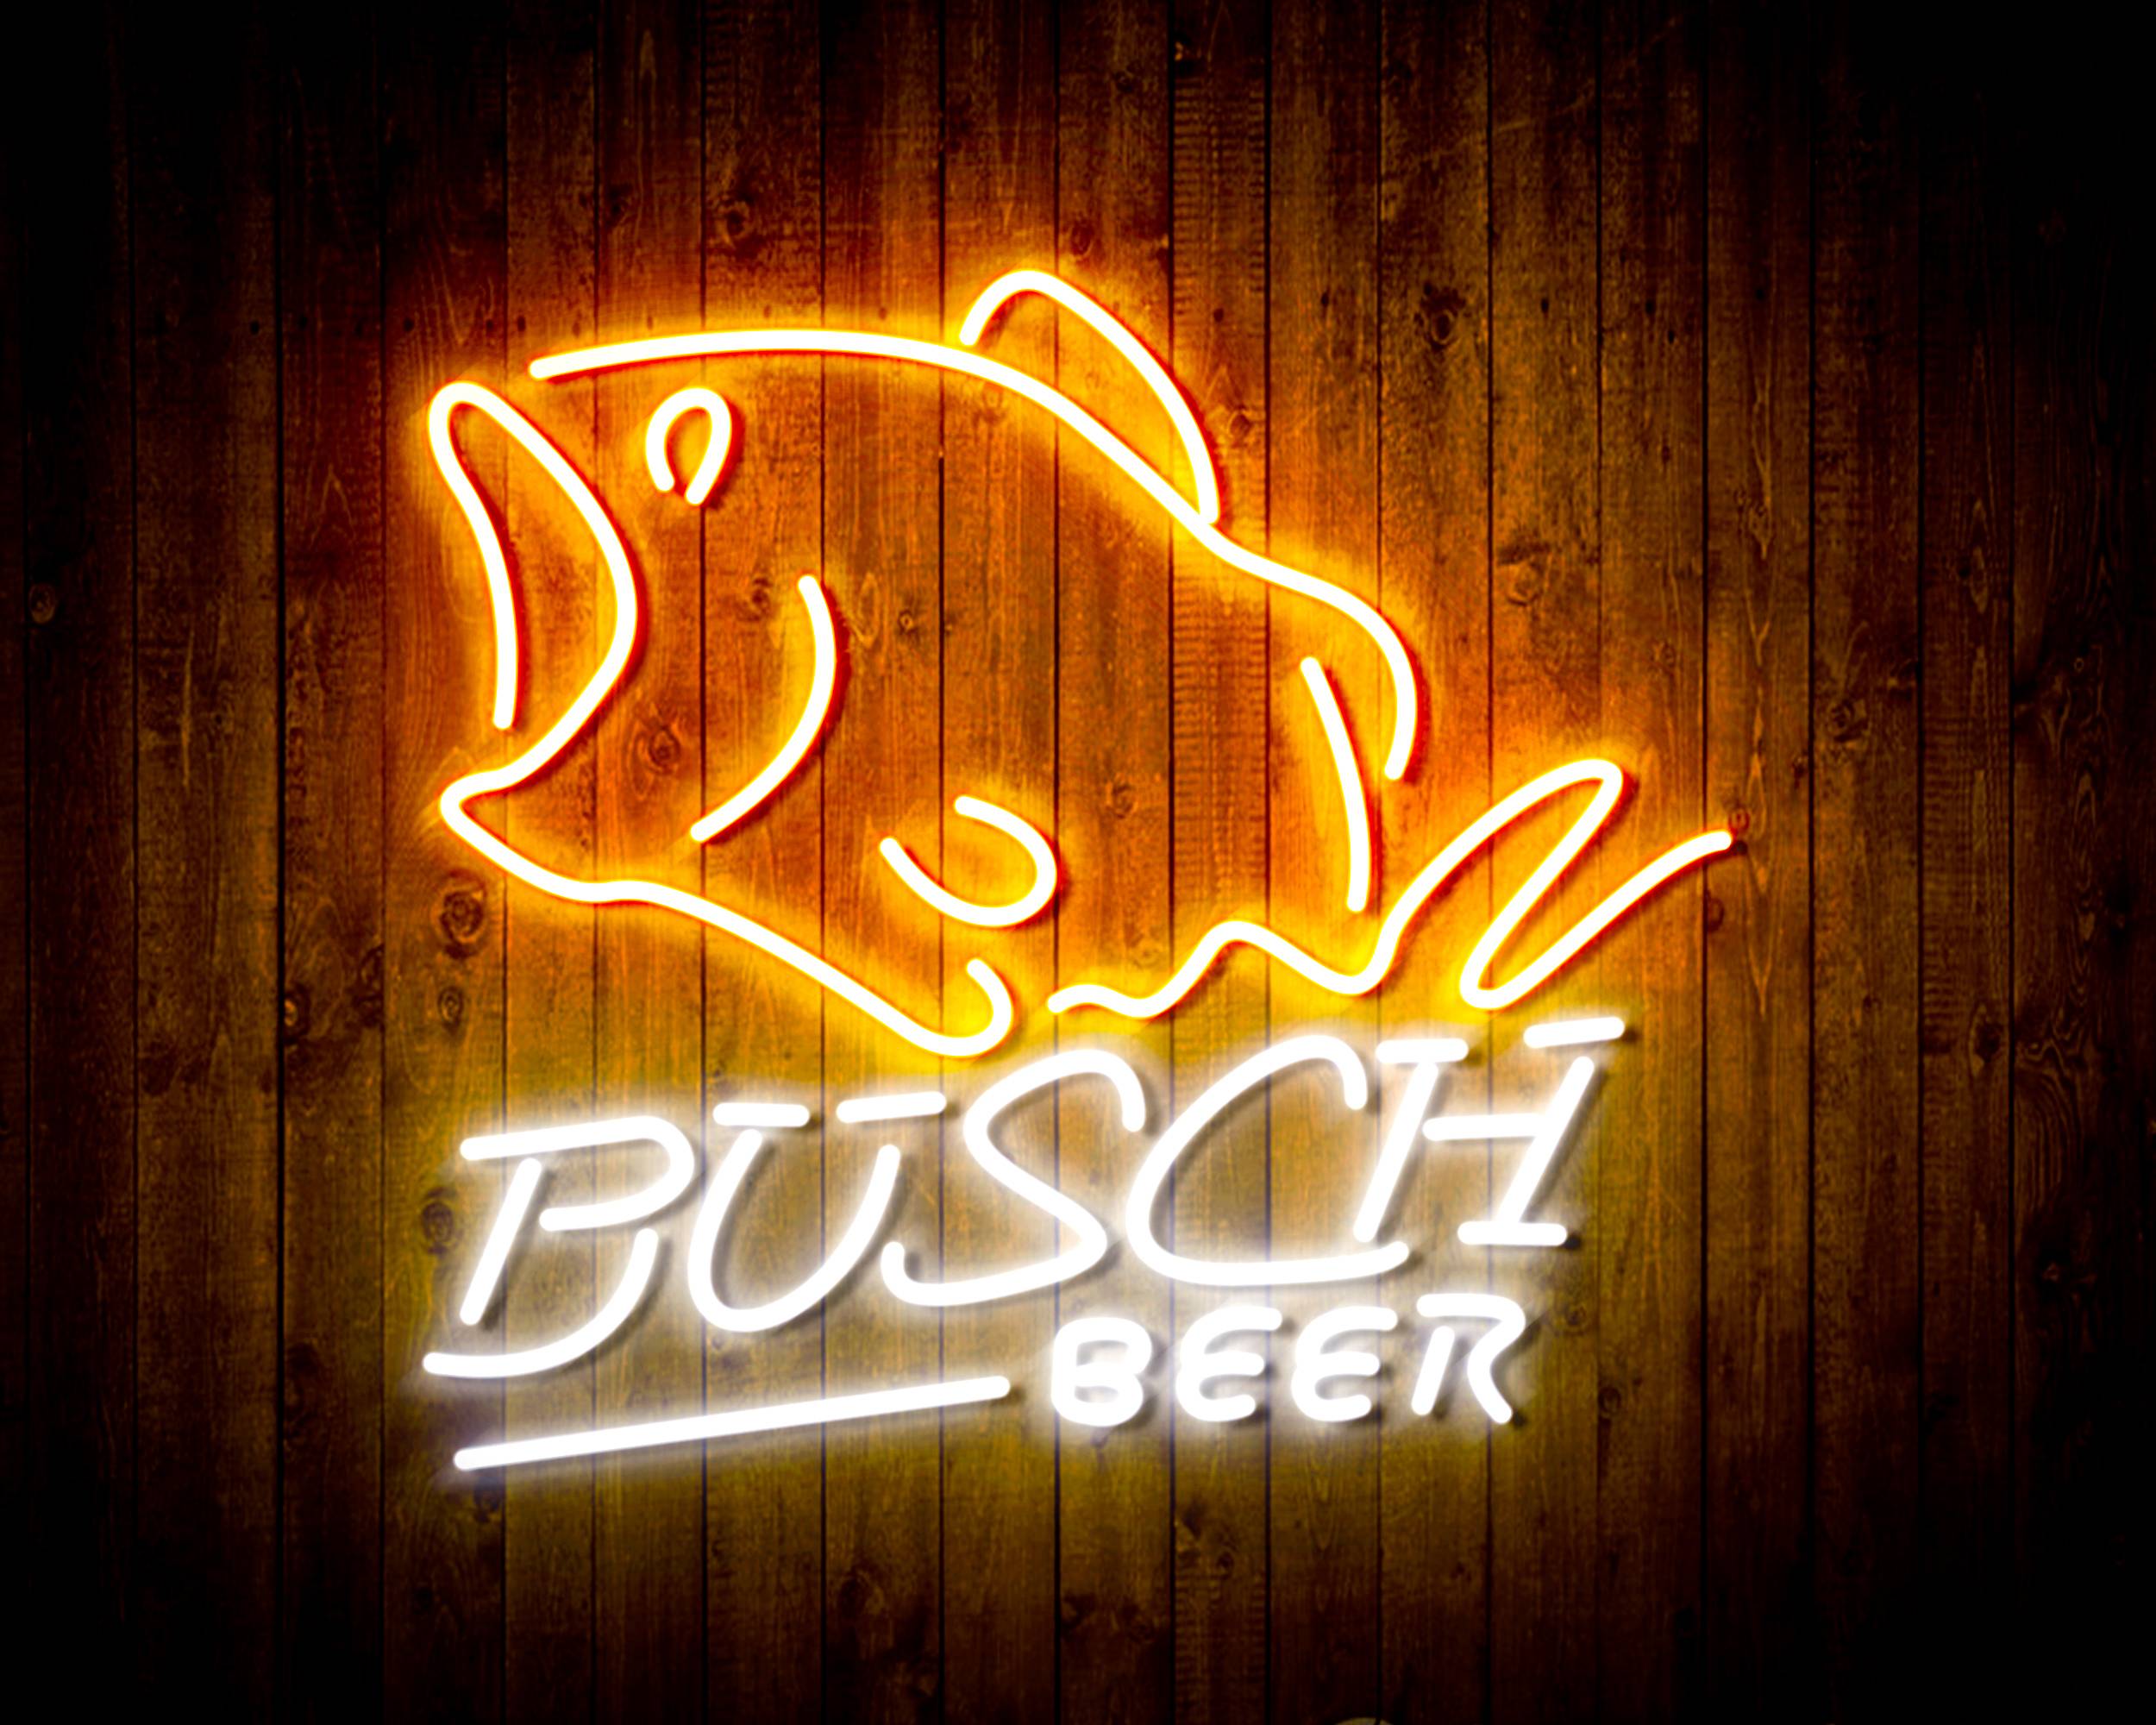 Busch Beer Fish Handmade LED Neon Light Sign